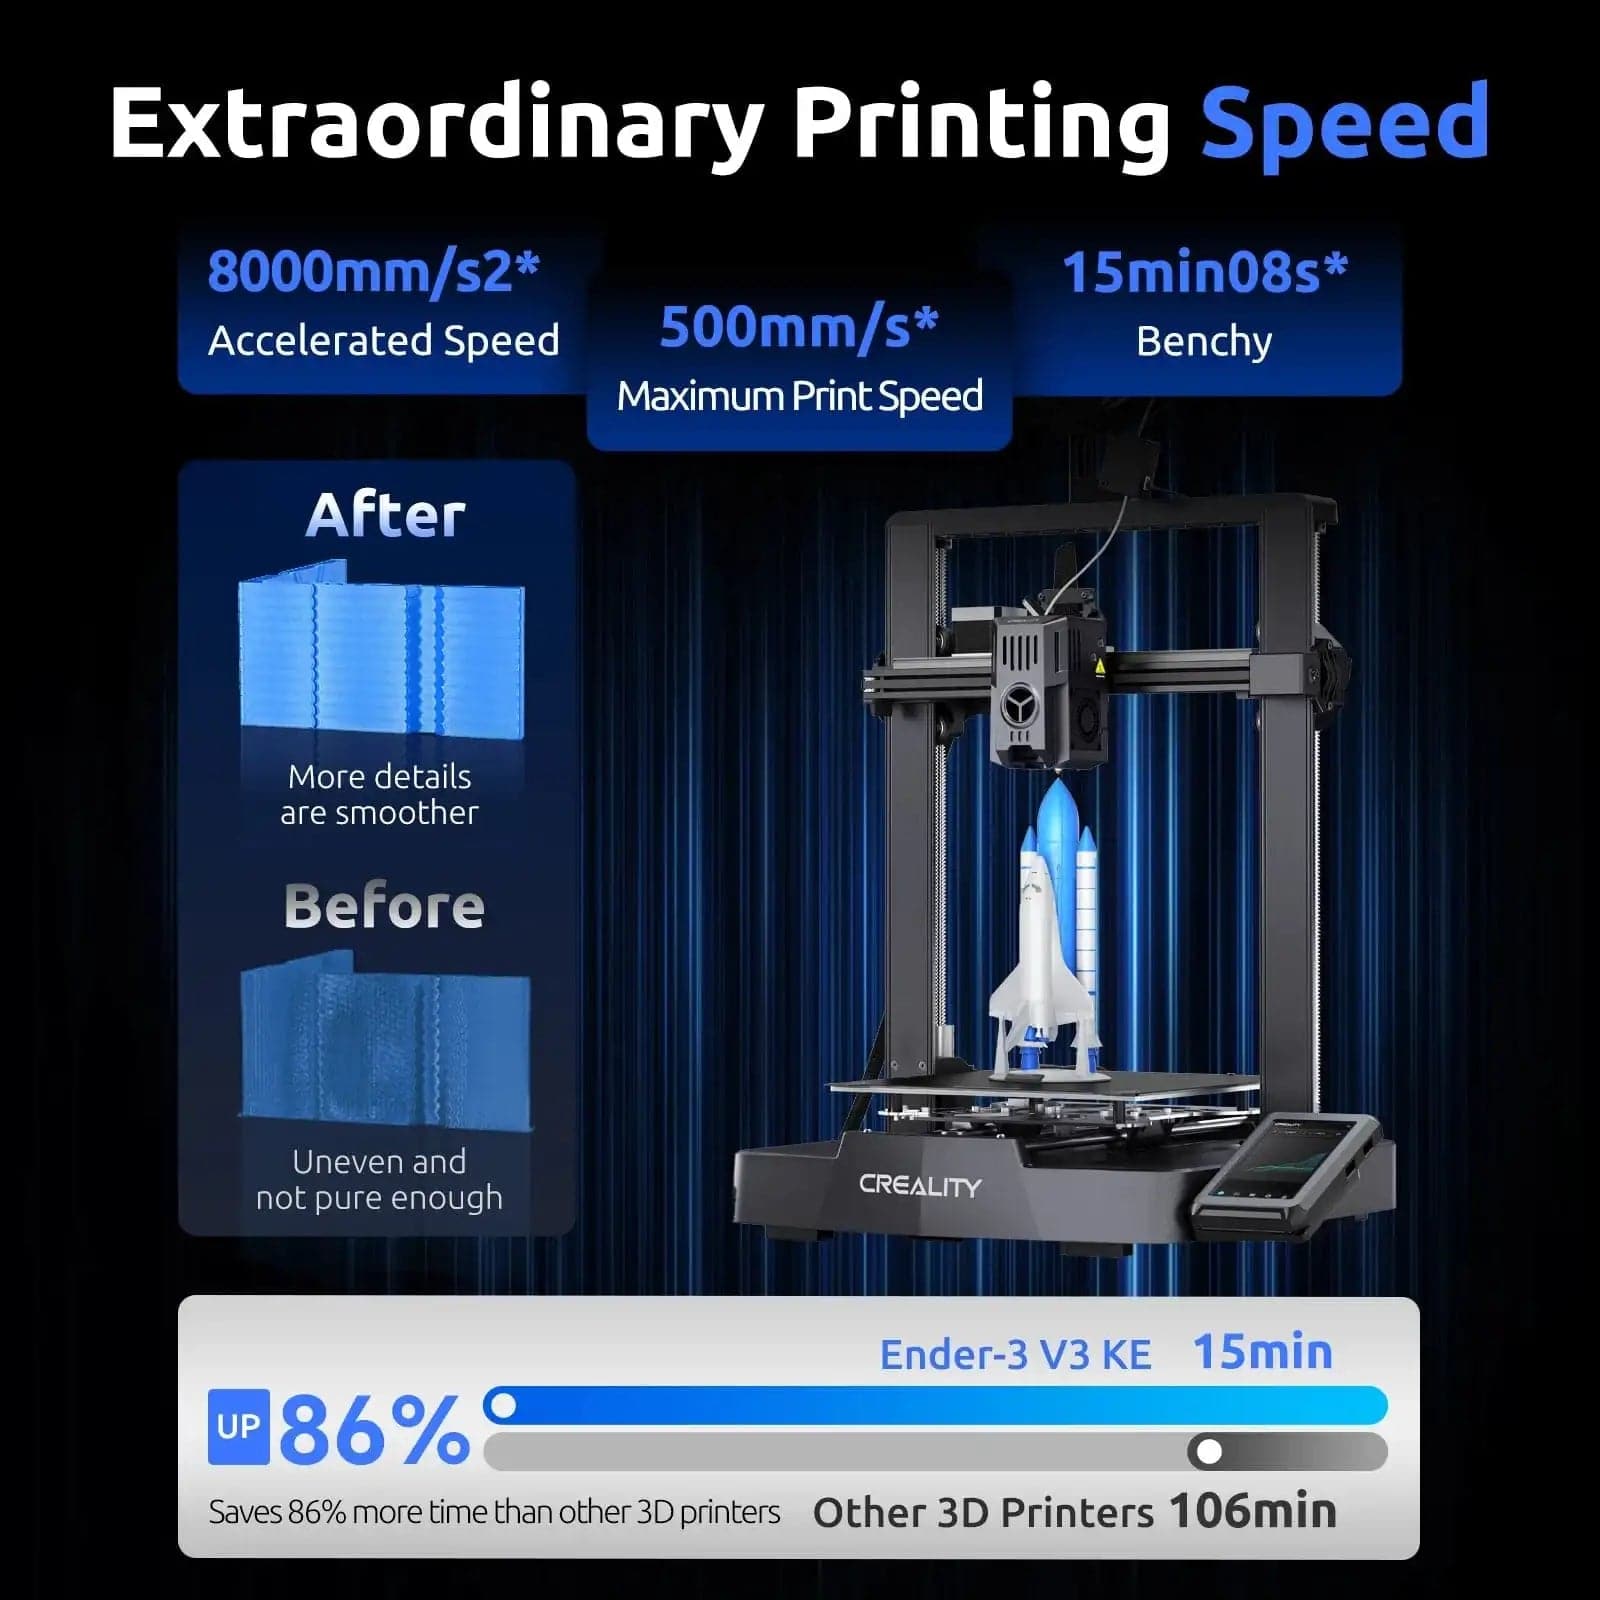 Creality Ender 3 V3 KE 3D Printer, 500mm/s High-Speed Printing